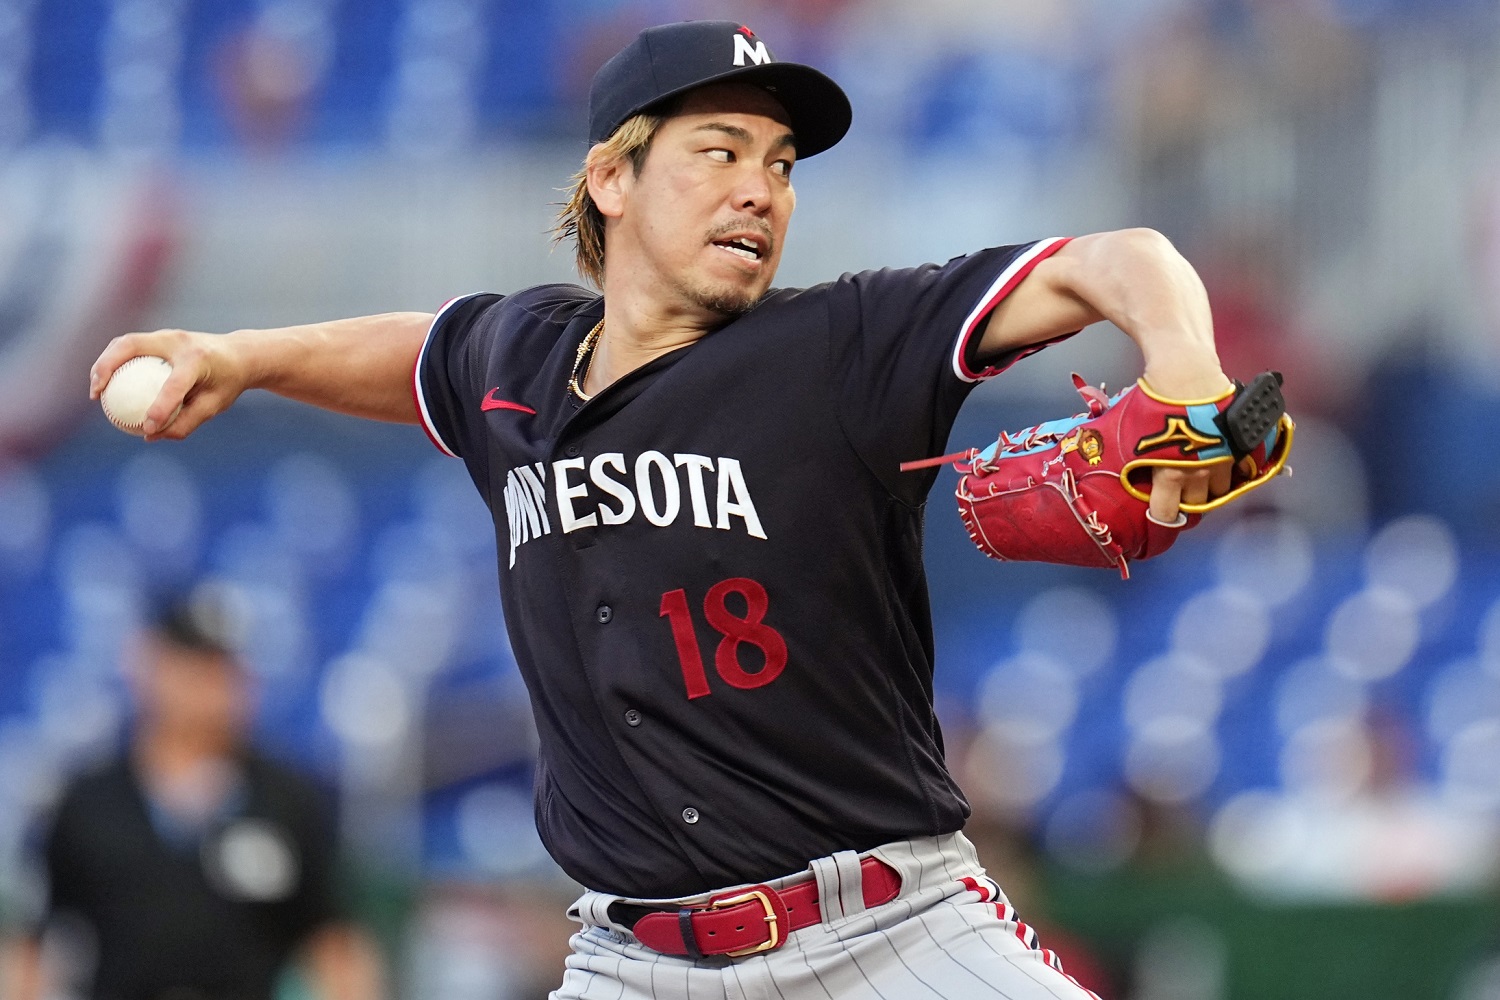 Baseball: Kenta Maeda earns 3rd win after 6 solid innings against D'backs